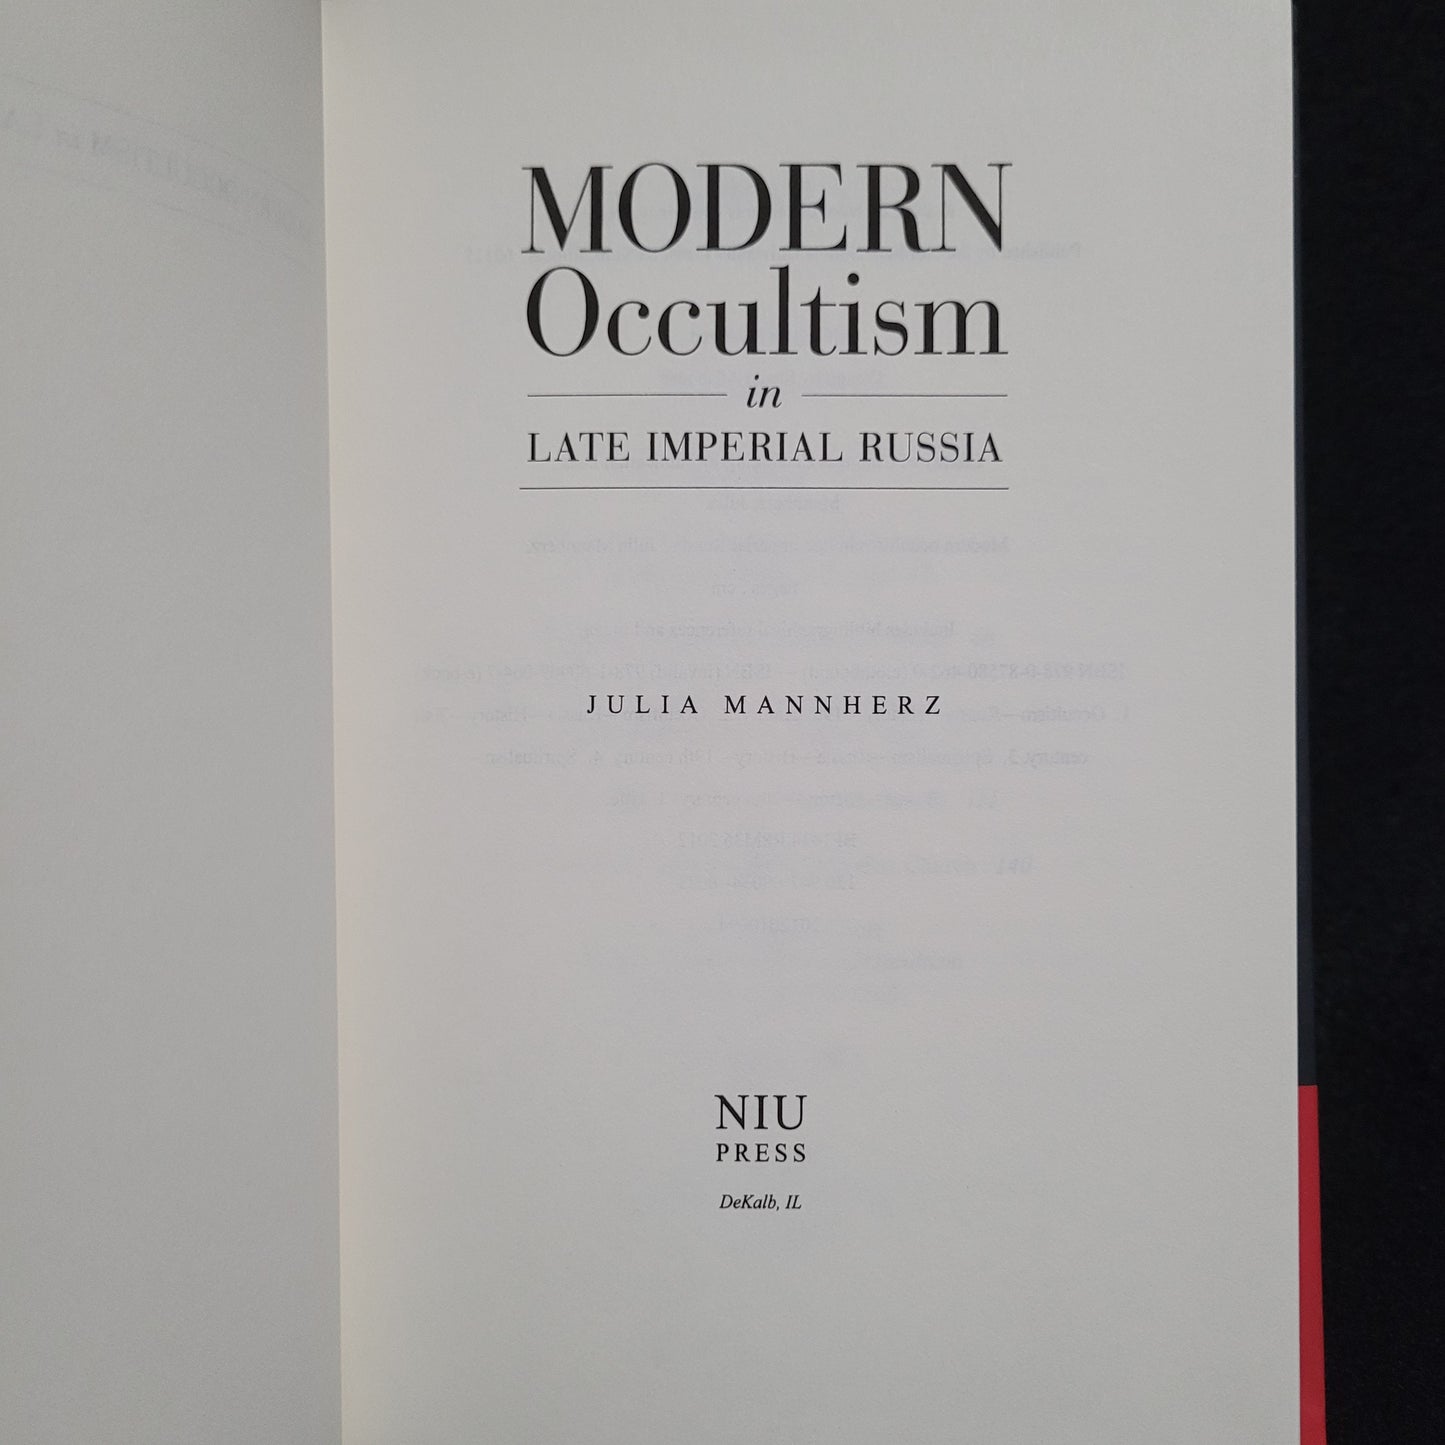 Modern Occultism in Late Imperial Russia by Julia Mannherz (NIU Press, 2012) Hardcover